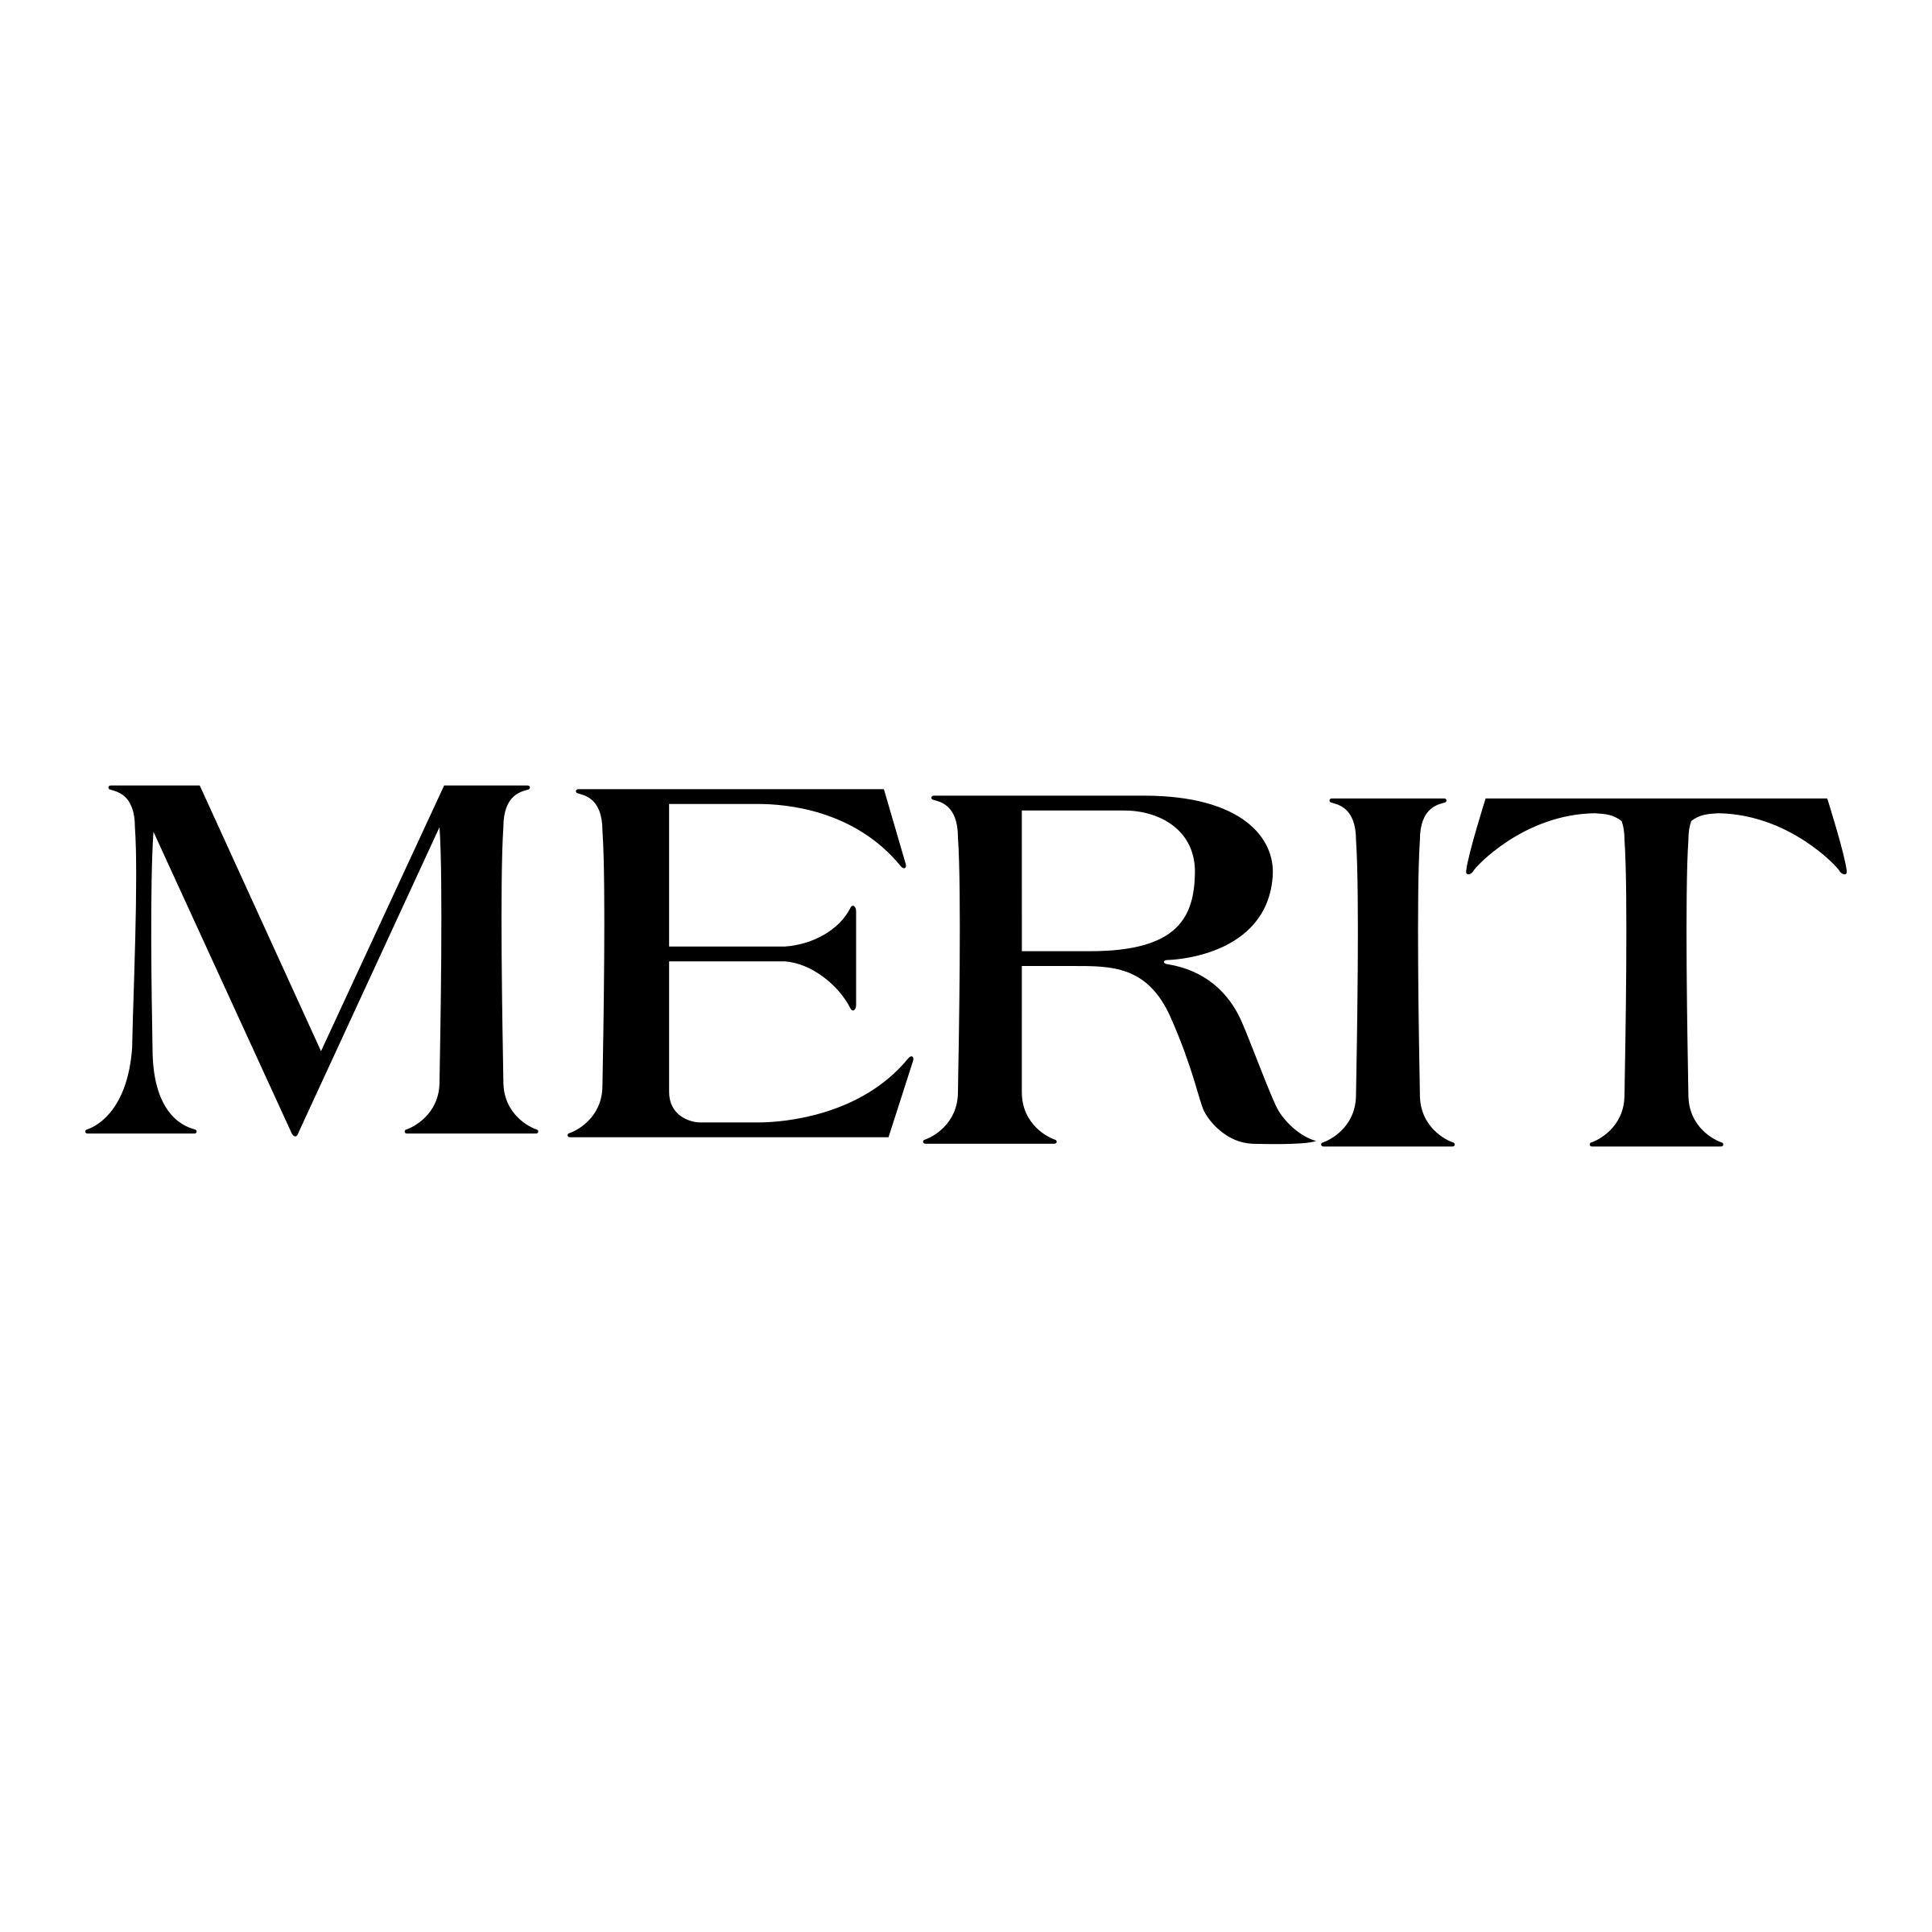 Merit Logo - Merit Logo PNG Transparent & SVG Vector - Freebie Supply